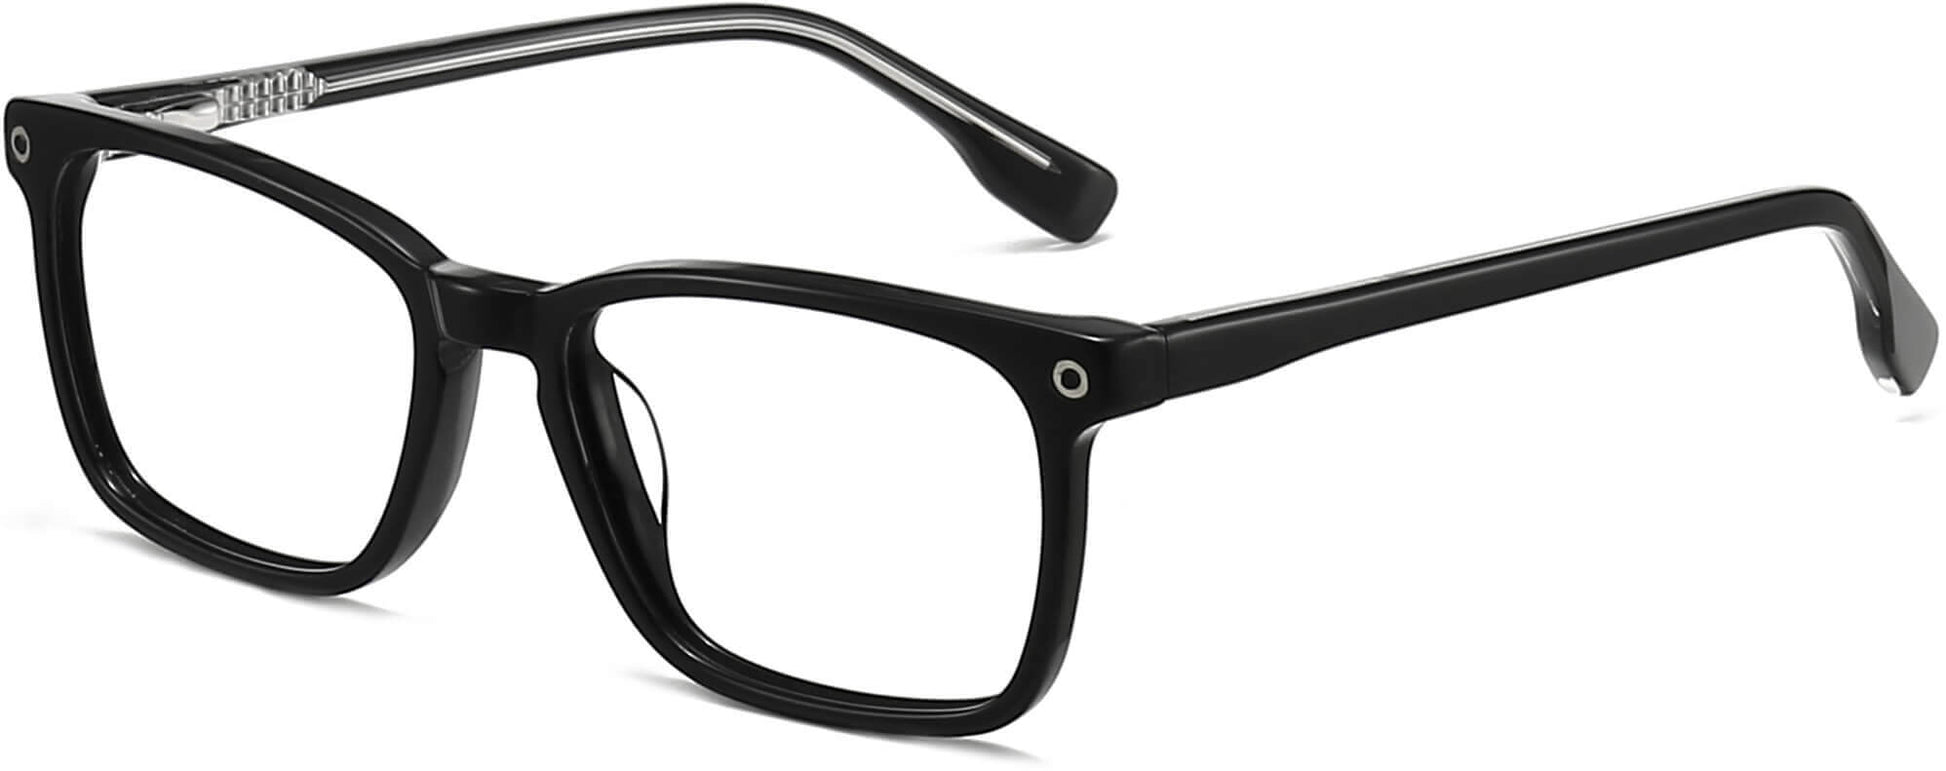 Eliana Square Black Eyeglasses from ANRRI, angle view